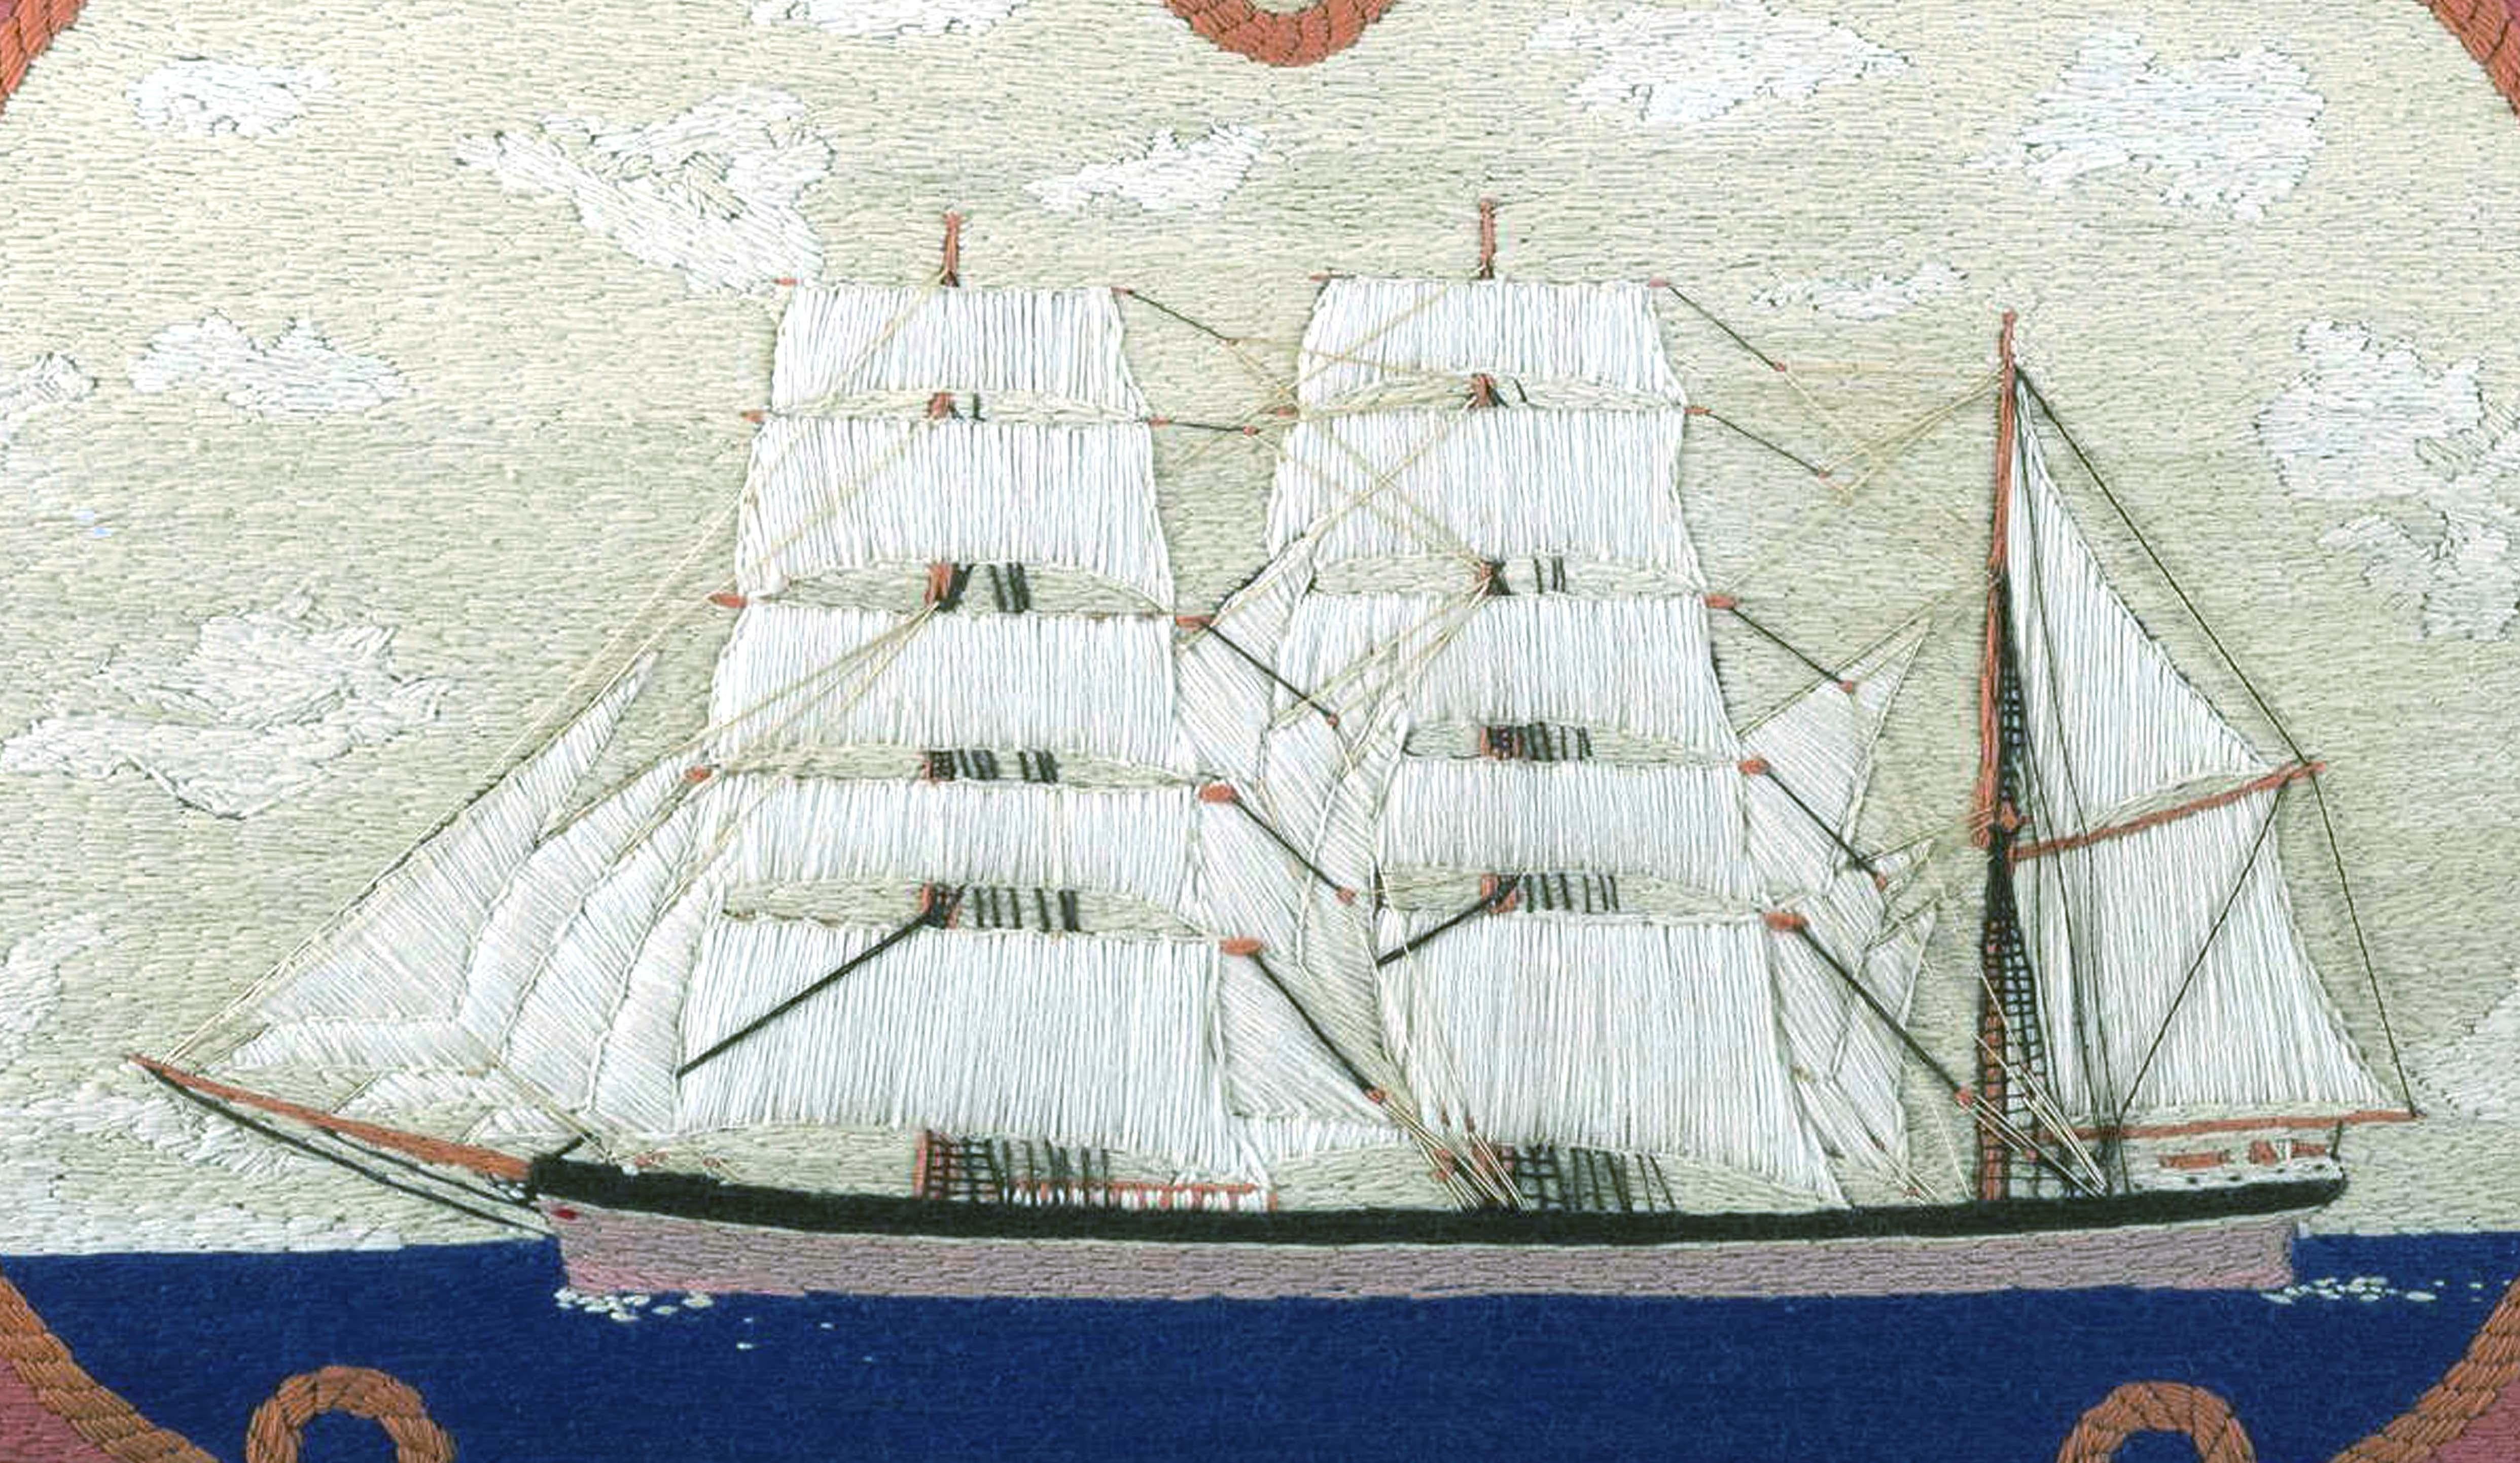 English British Sailor's Woolwork or Woolie of a Royal Navy Ship, circa 1870